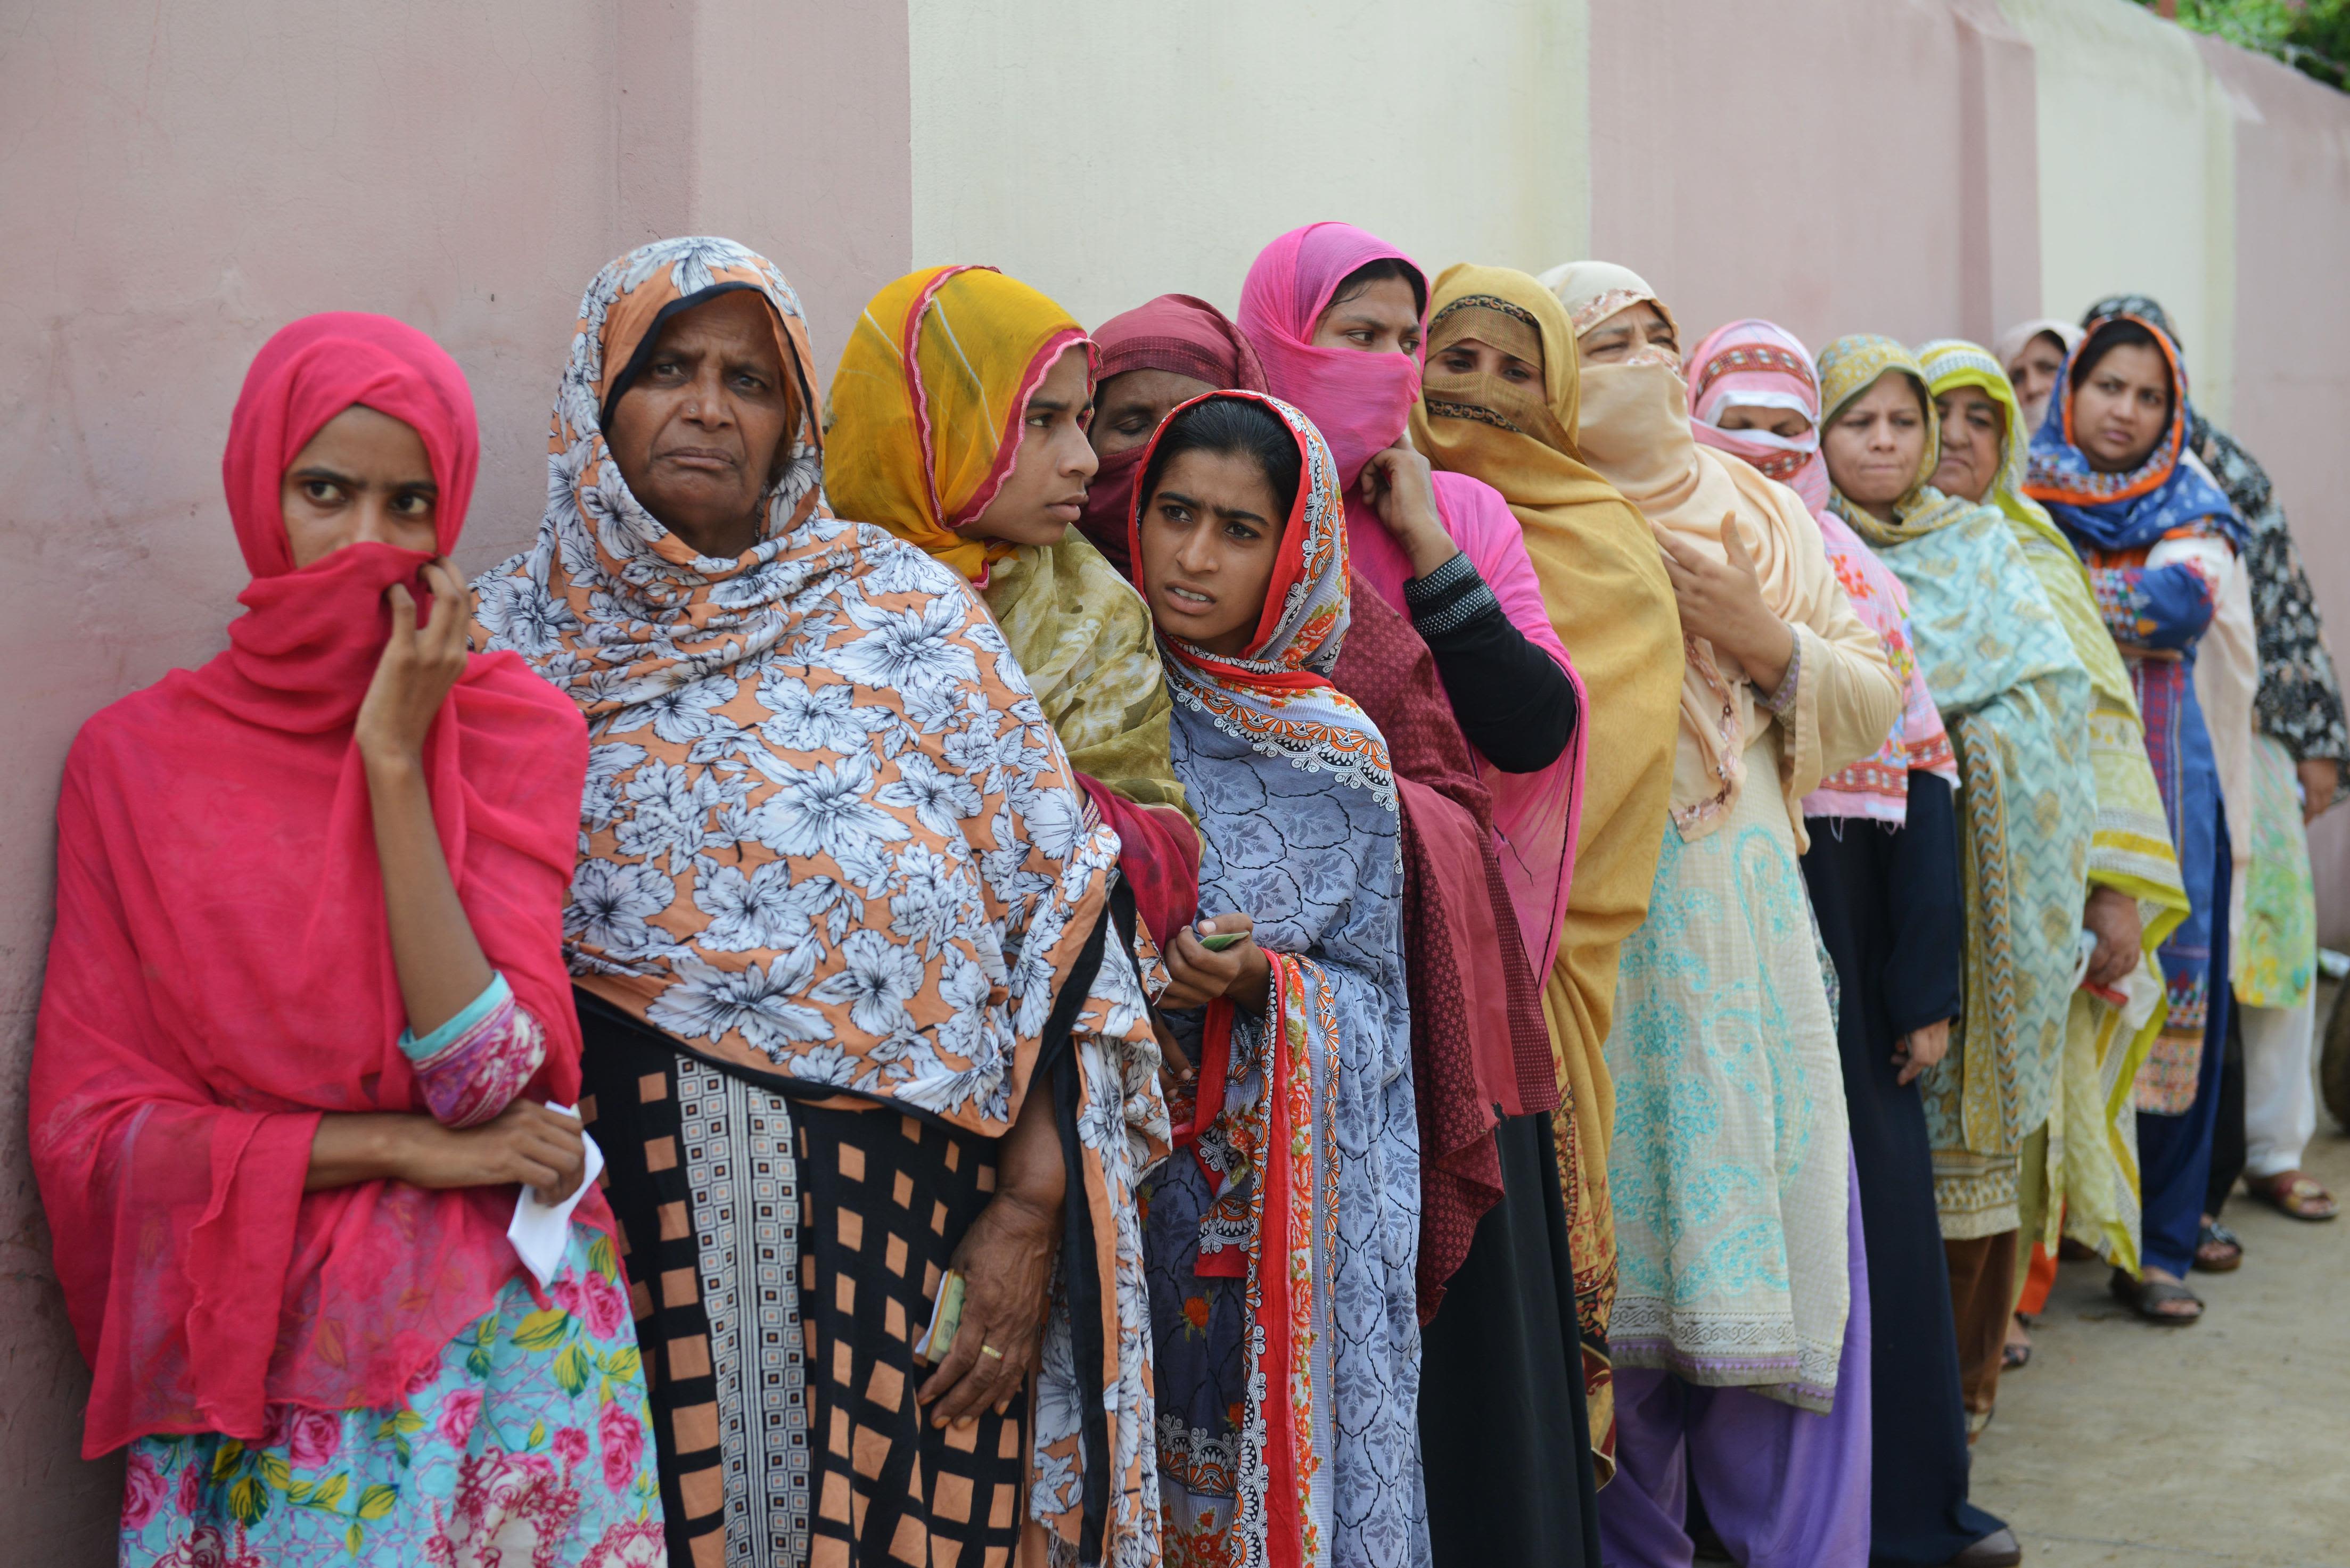 180728130258-pakistan-women-voters-5.jpg